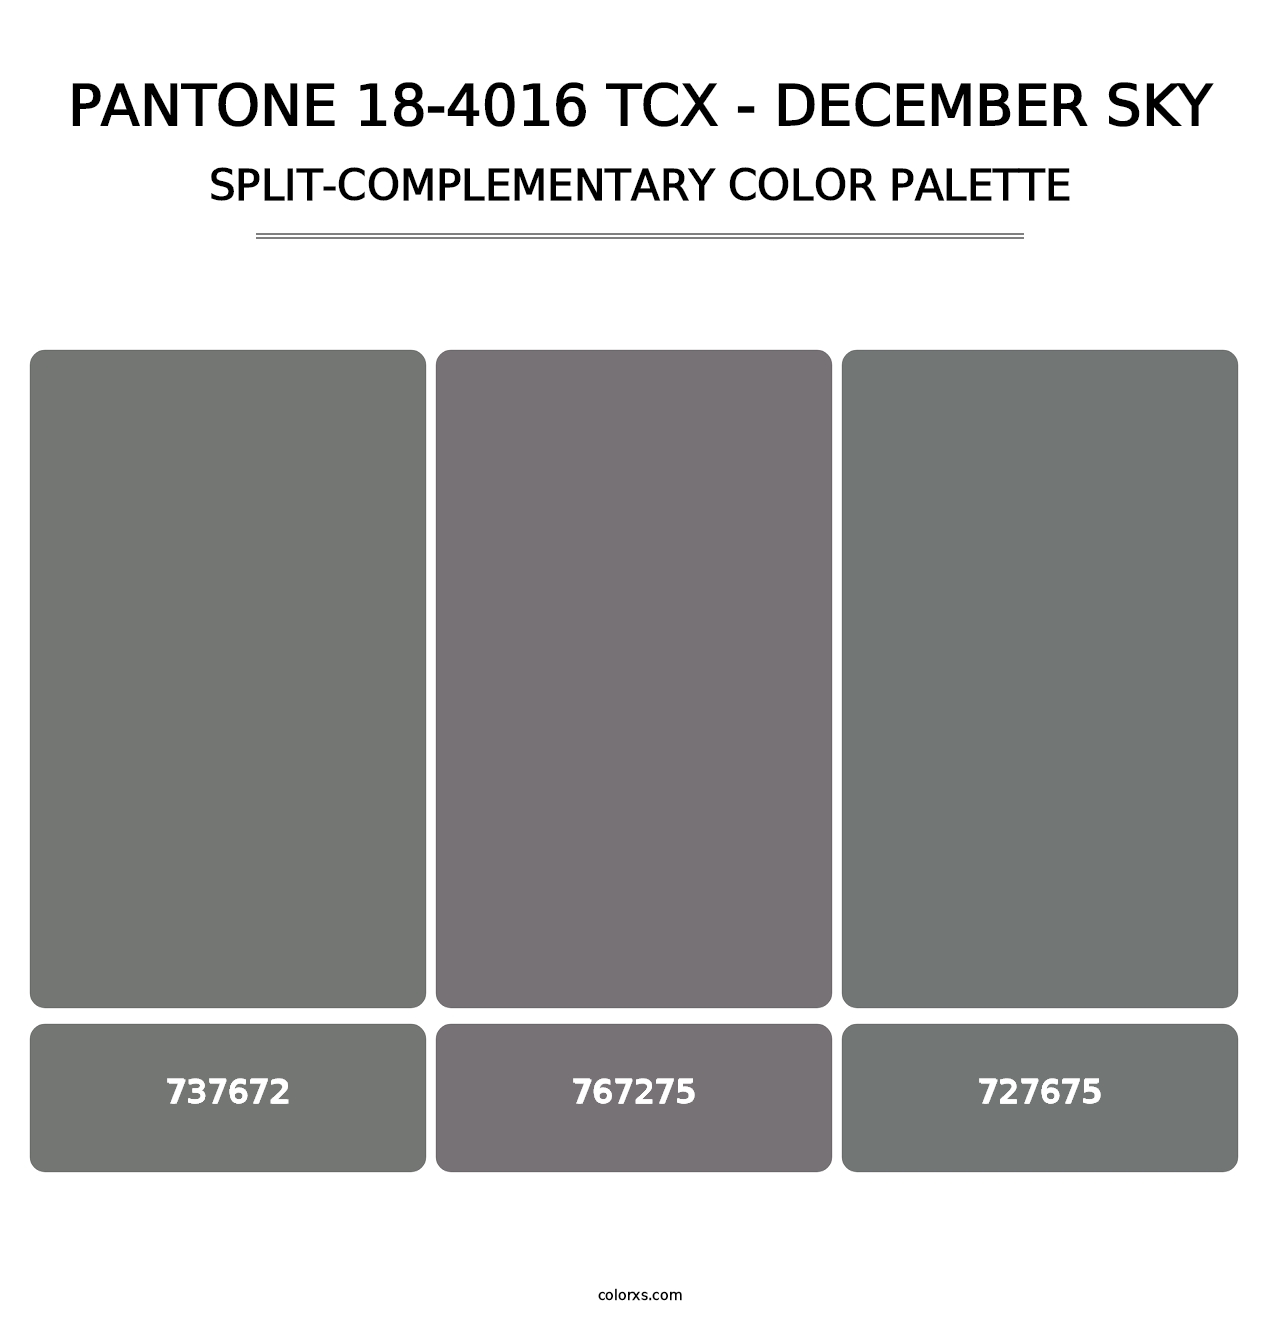 PANTONE 18-4016 TCX - December Sky - Split-Complementary Color Palette